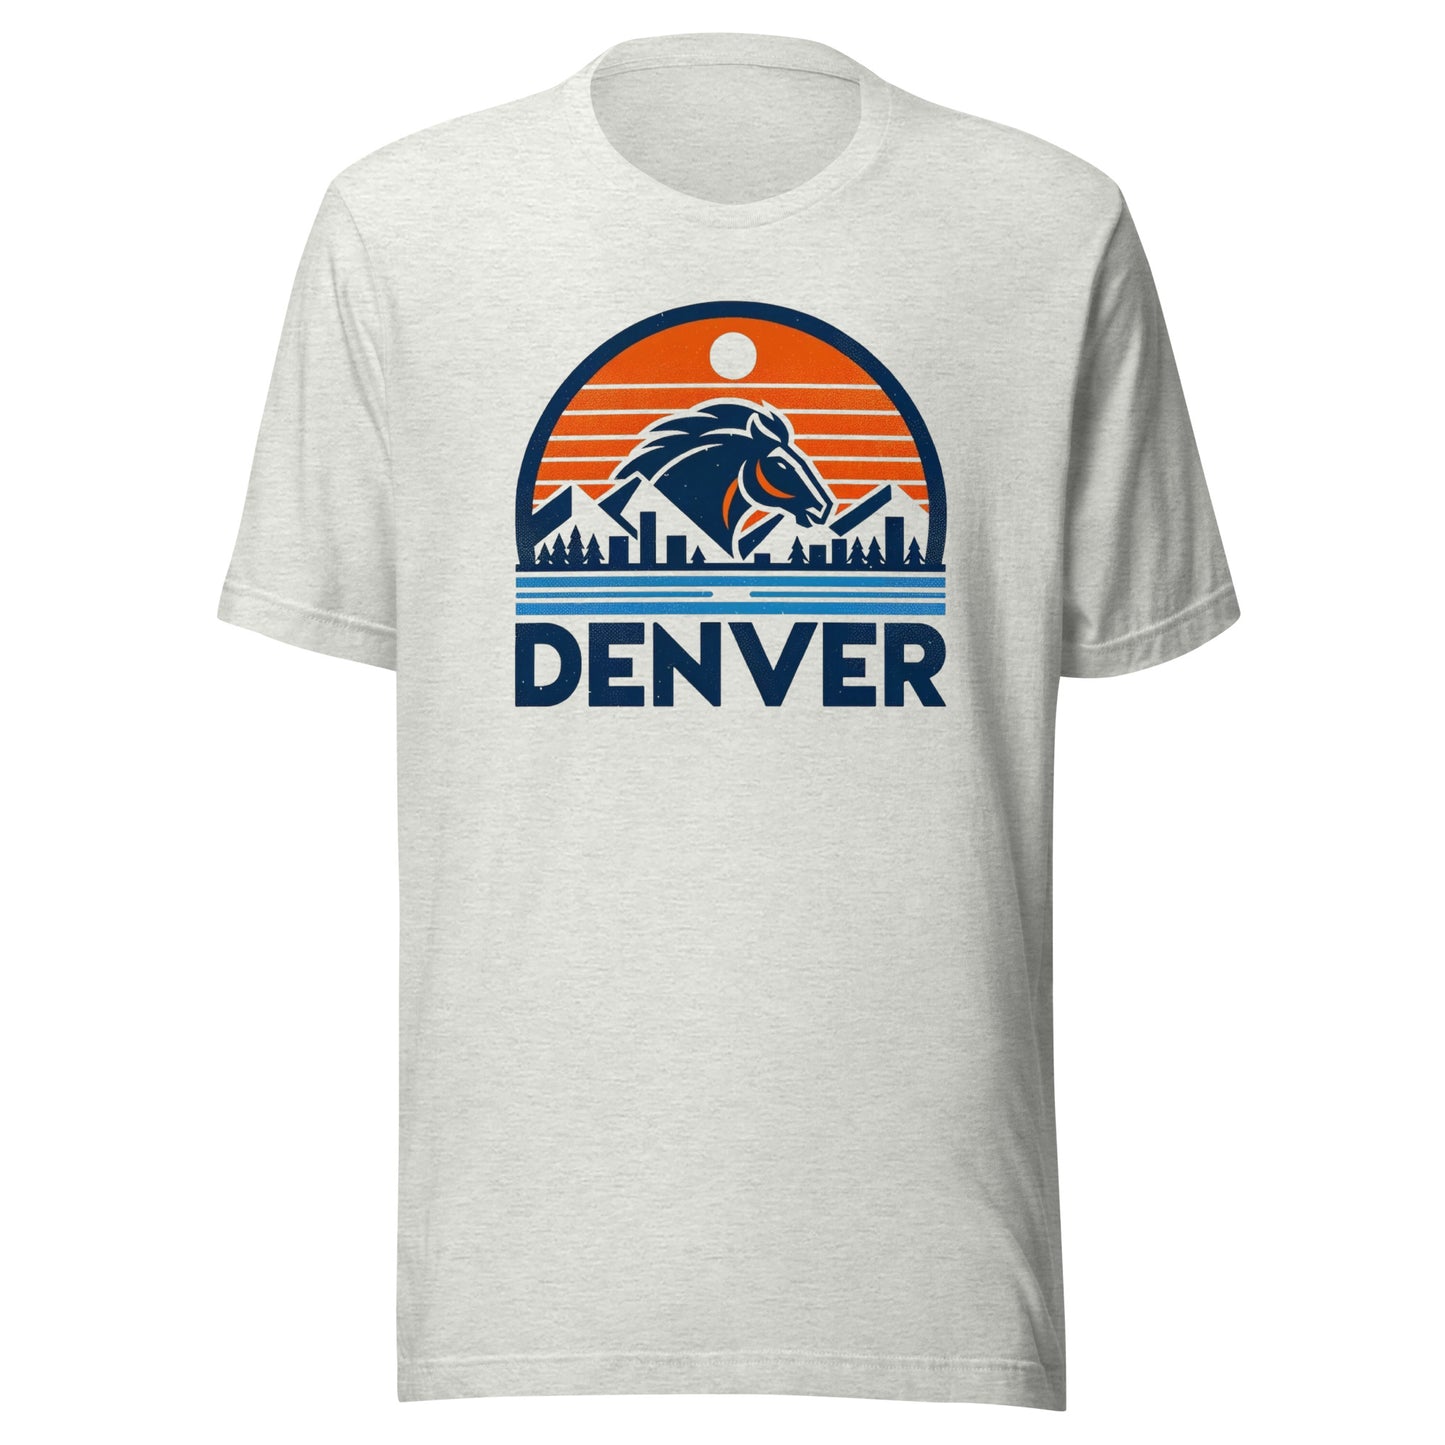 Denver Gridiron: Riding Momentum - Retro Football Tapestry Series Unisex t-shirt